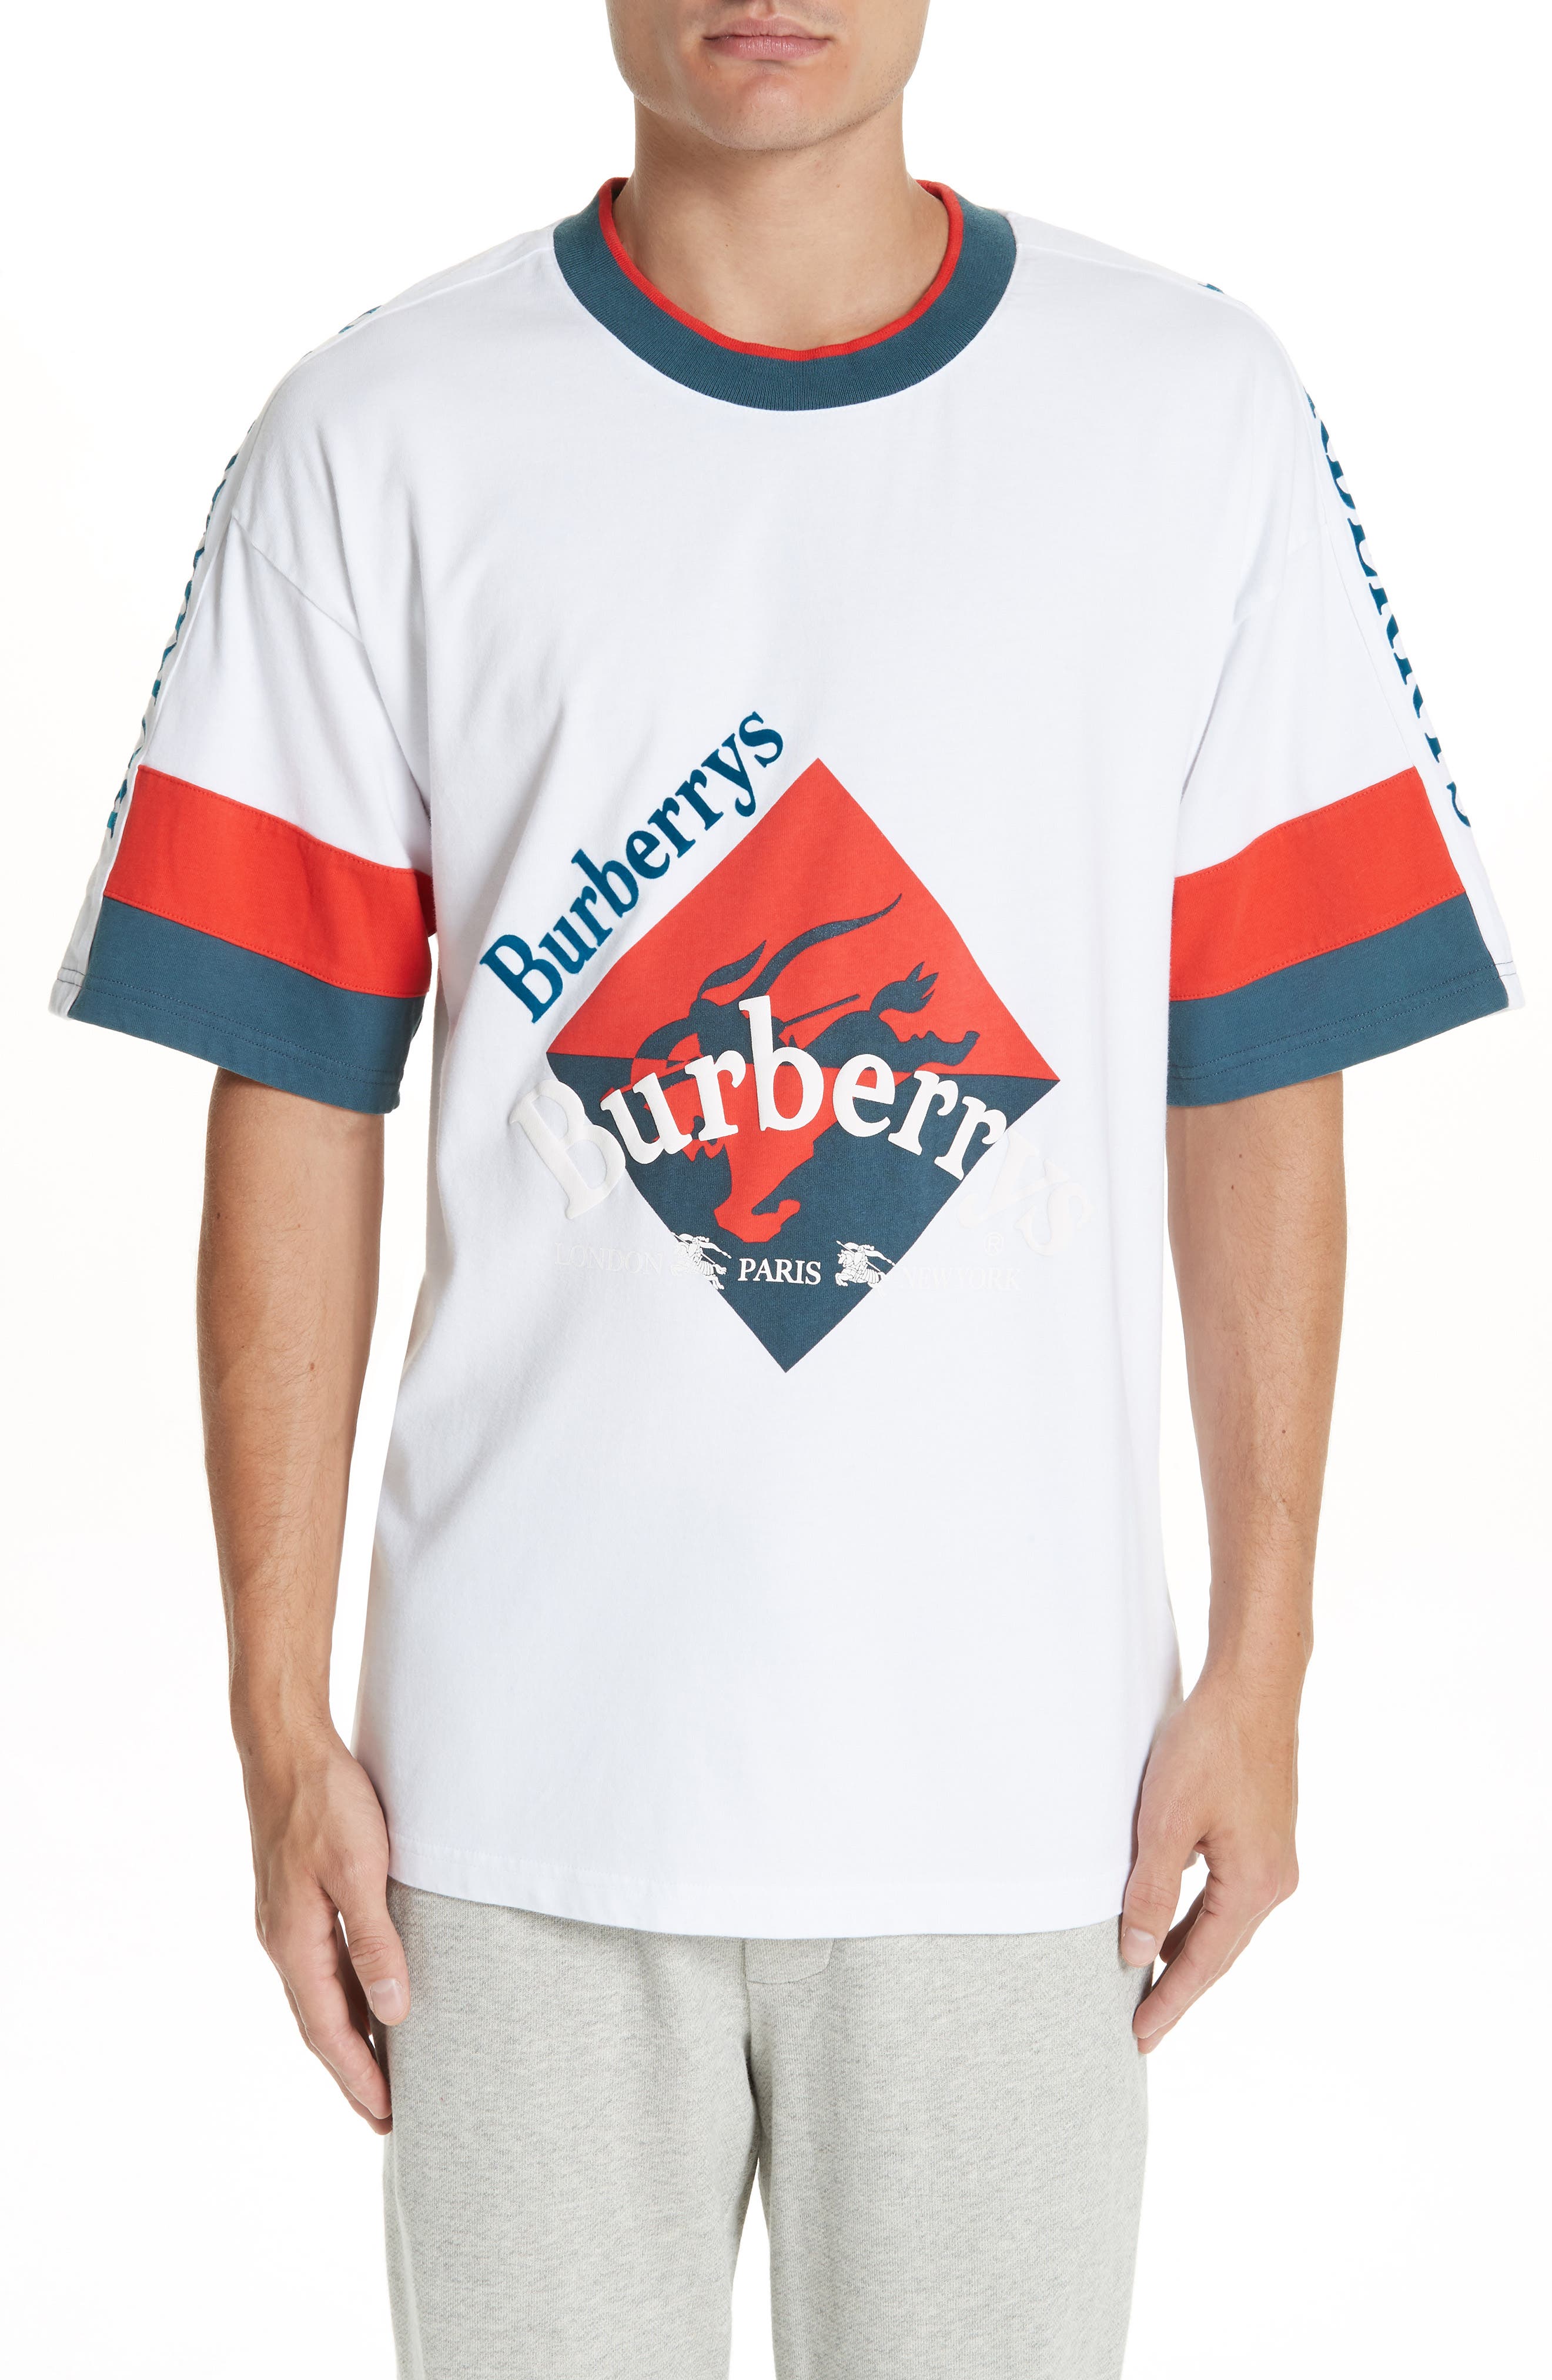 burberry t shirt nordstrom